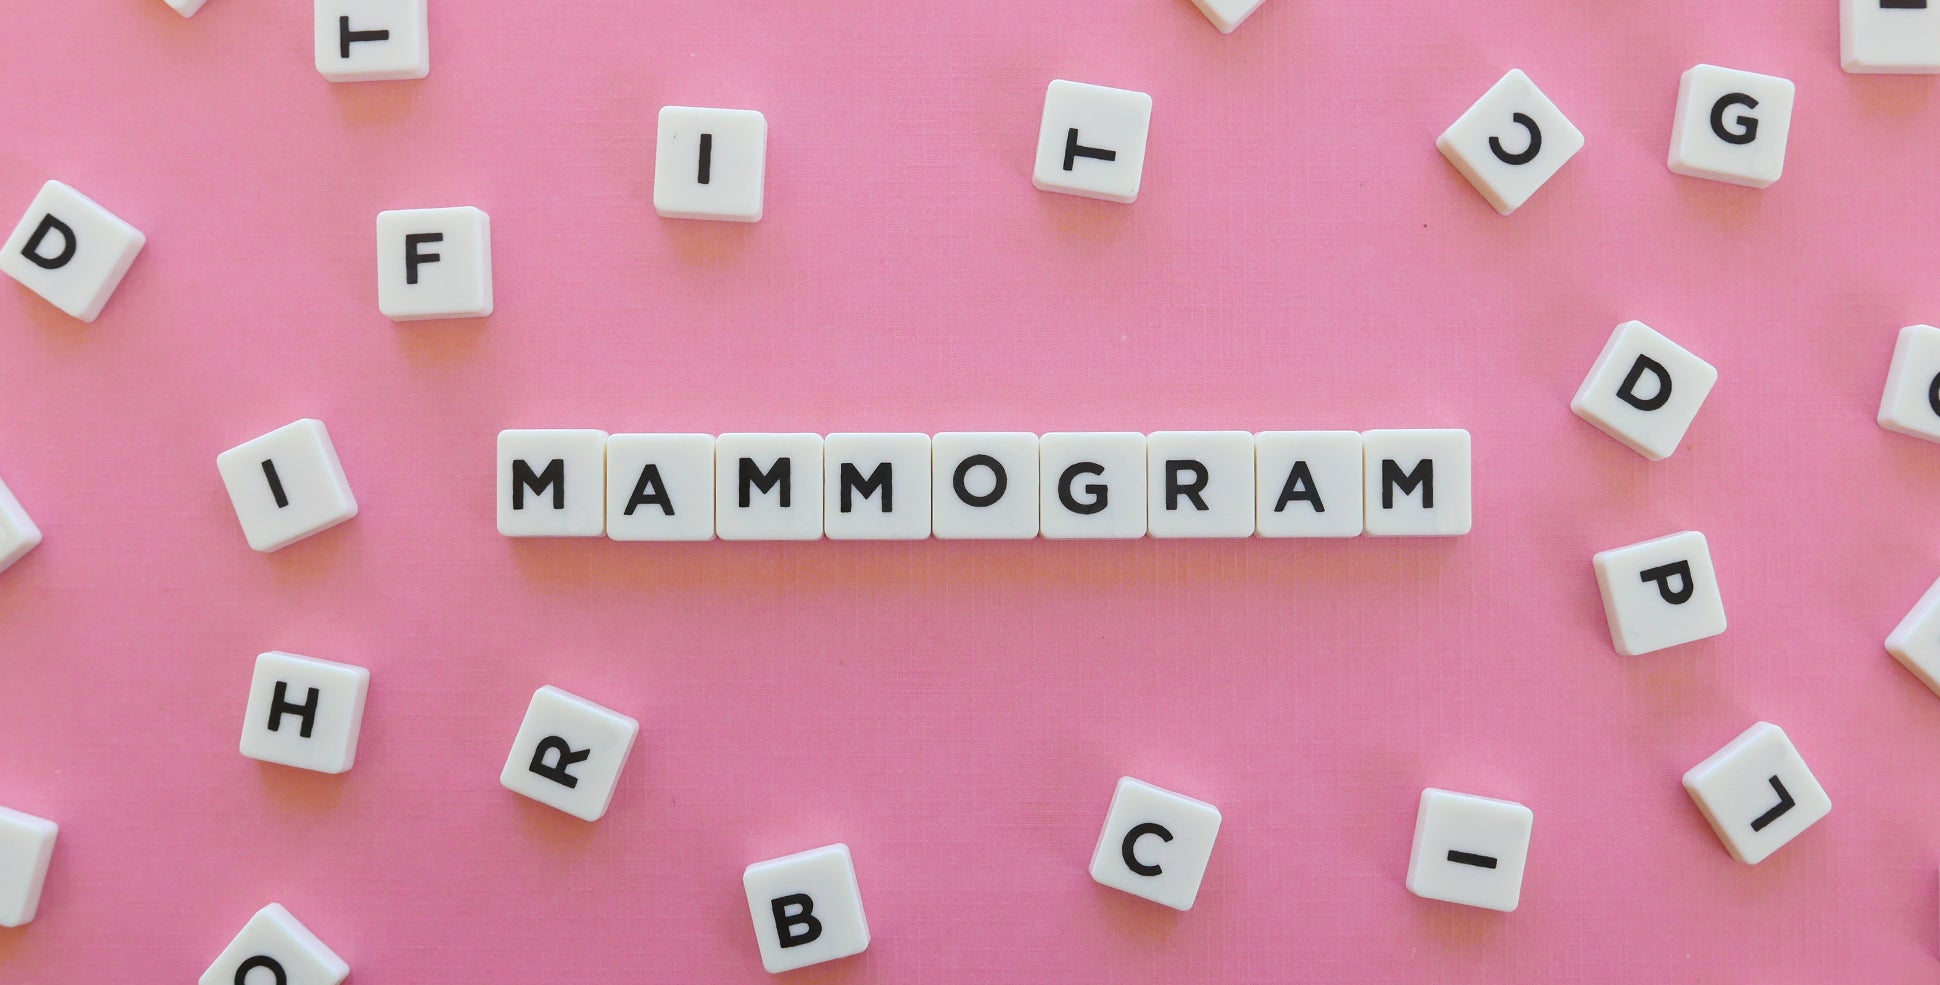 Mammograms 